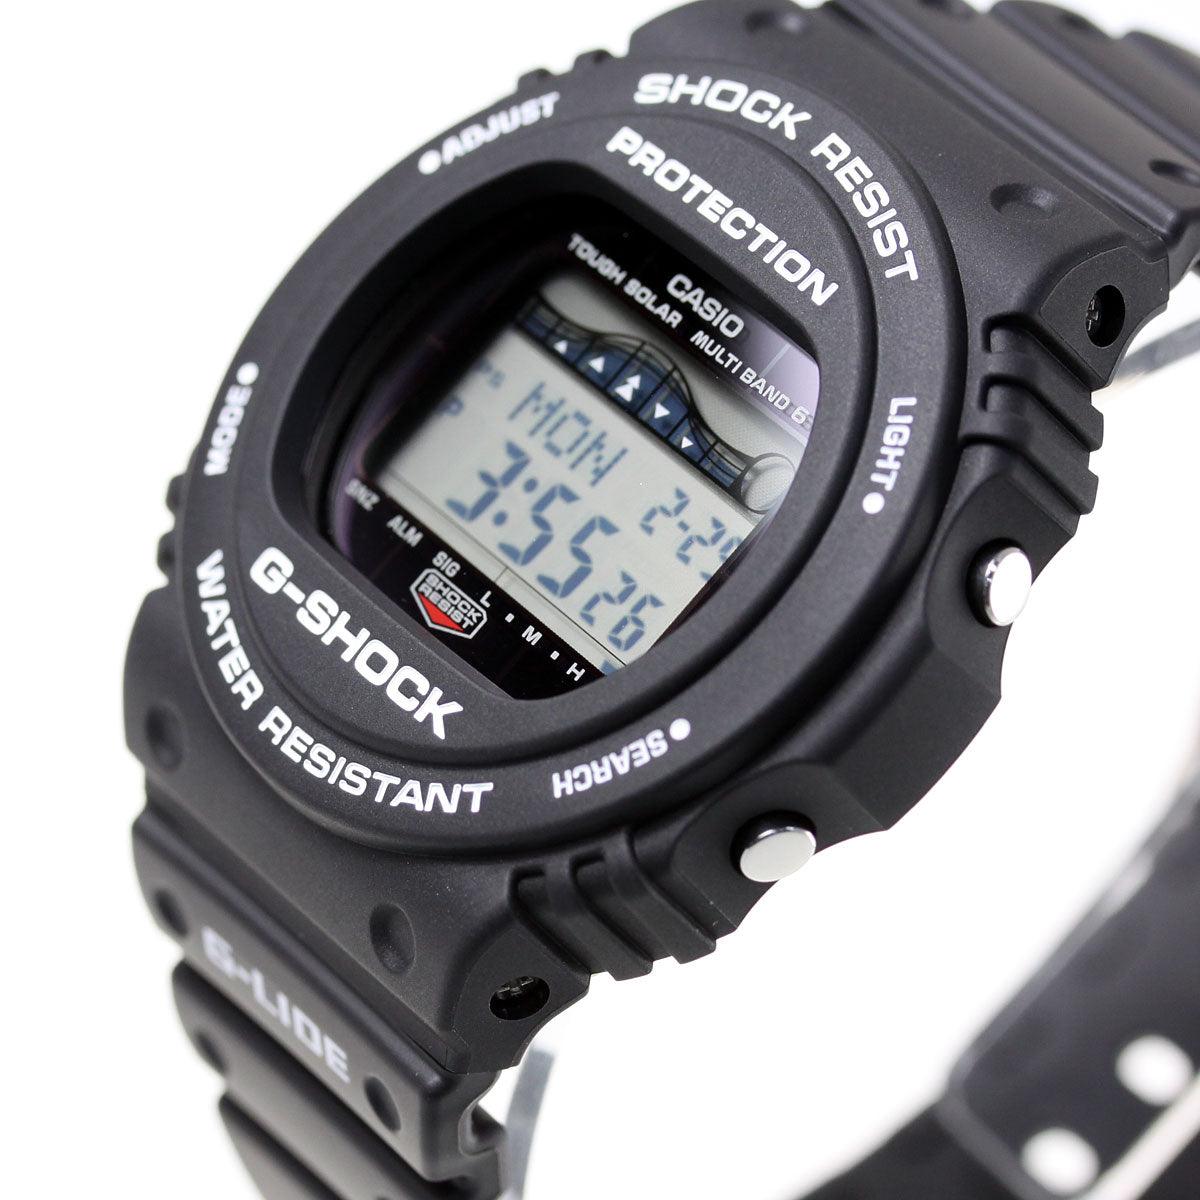 G-SHOCK 電波 ソーラー 電波時計 ブラック カシオ Gショック G-LIDE 腕時計 メンズ CASIO GWX-5700CS-1JF